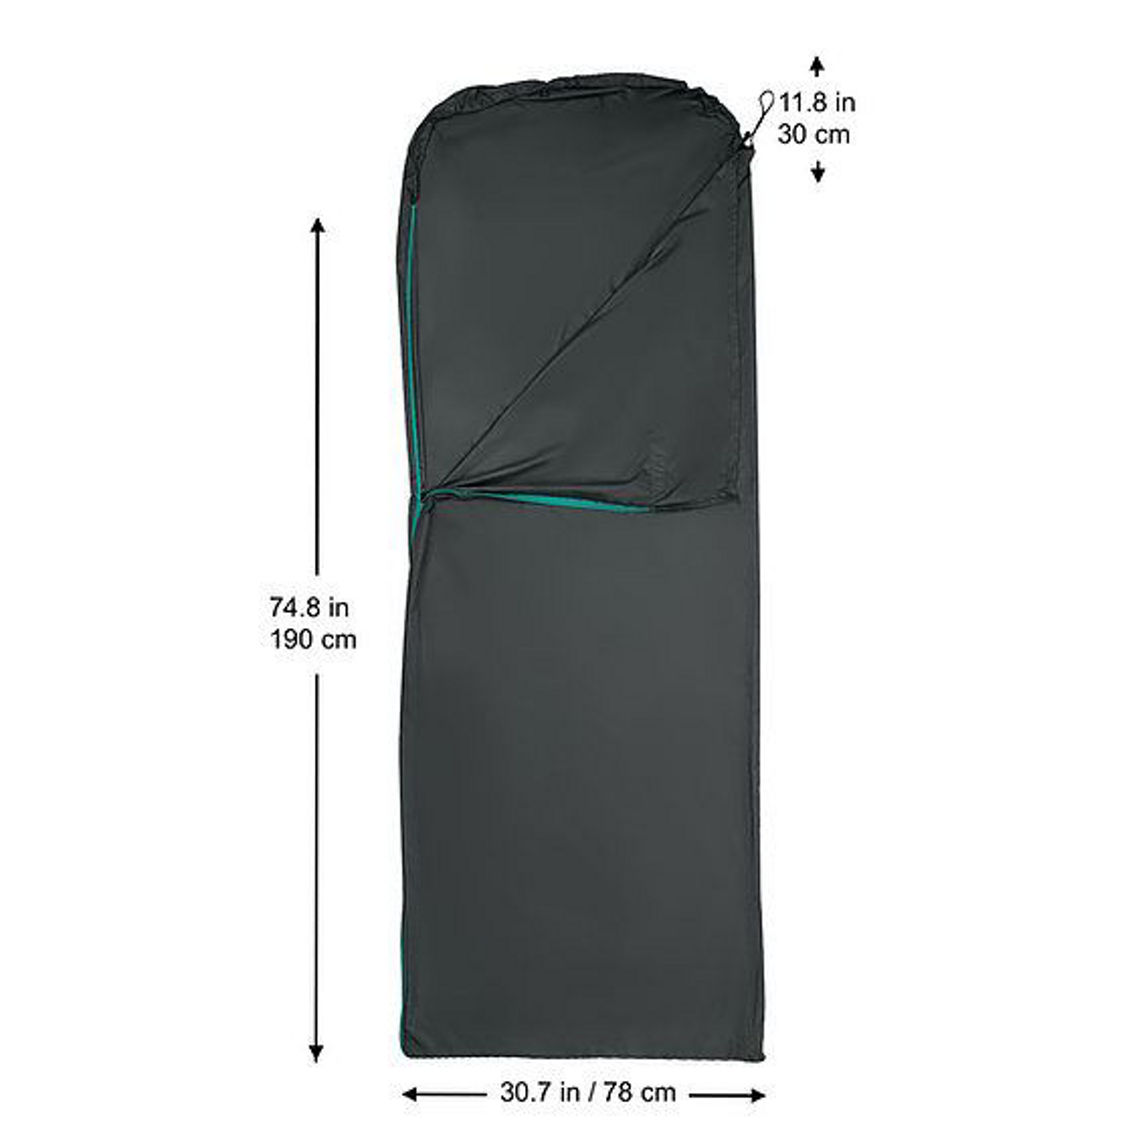 Chia Polyester Sleeping Bag Liner - Image 4 of 5